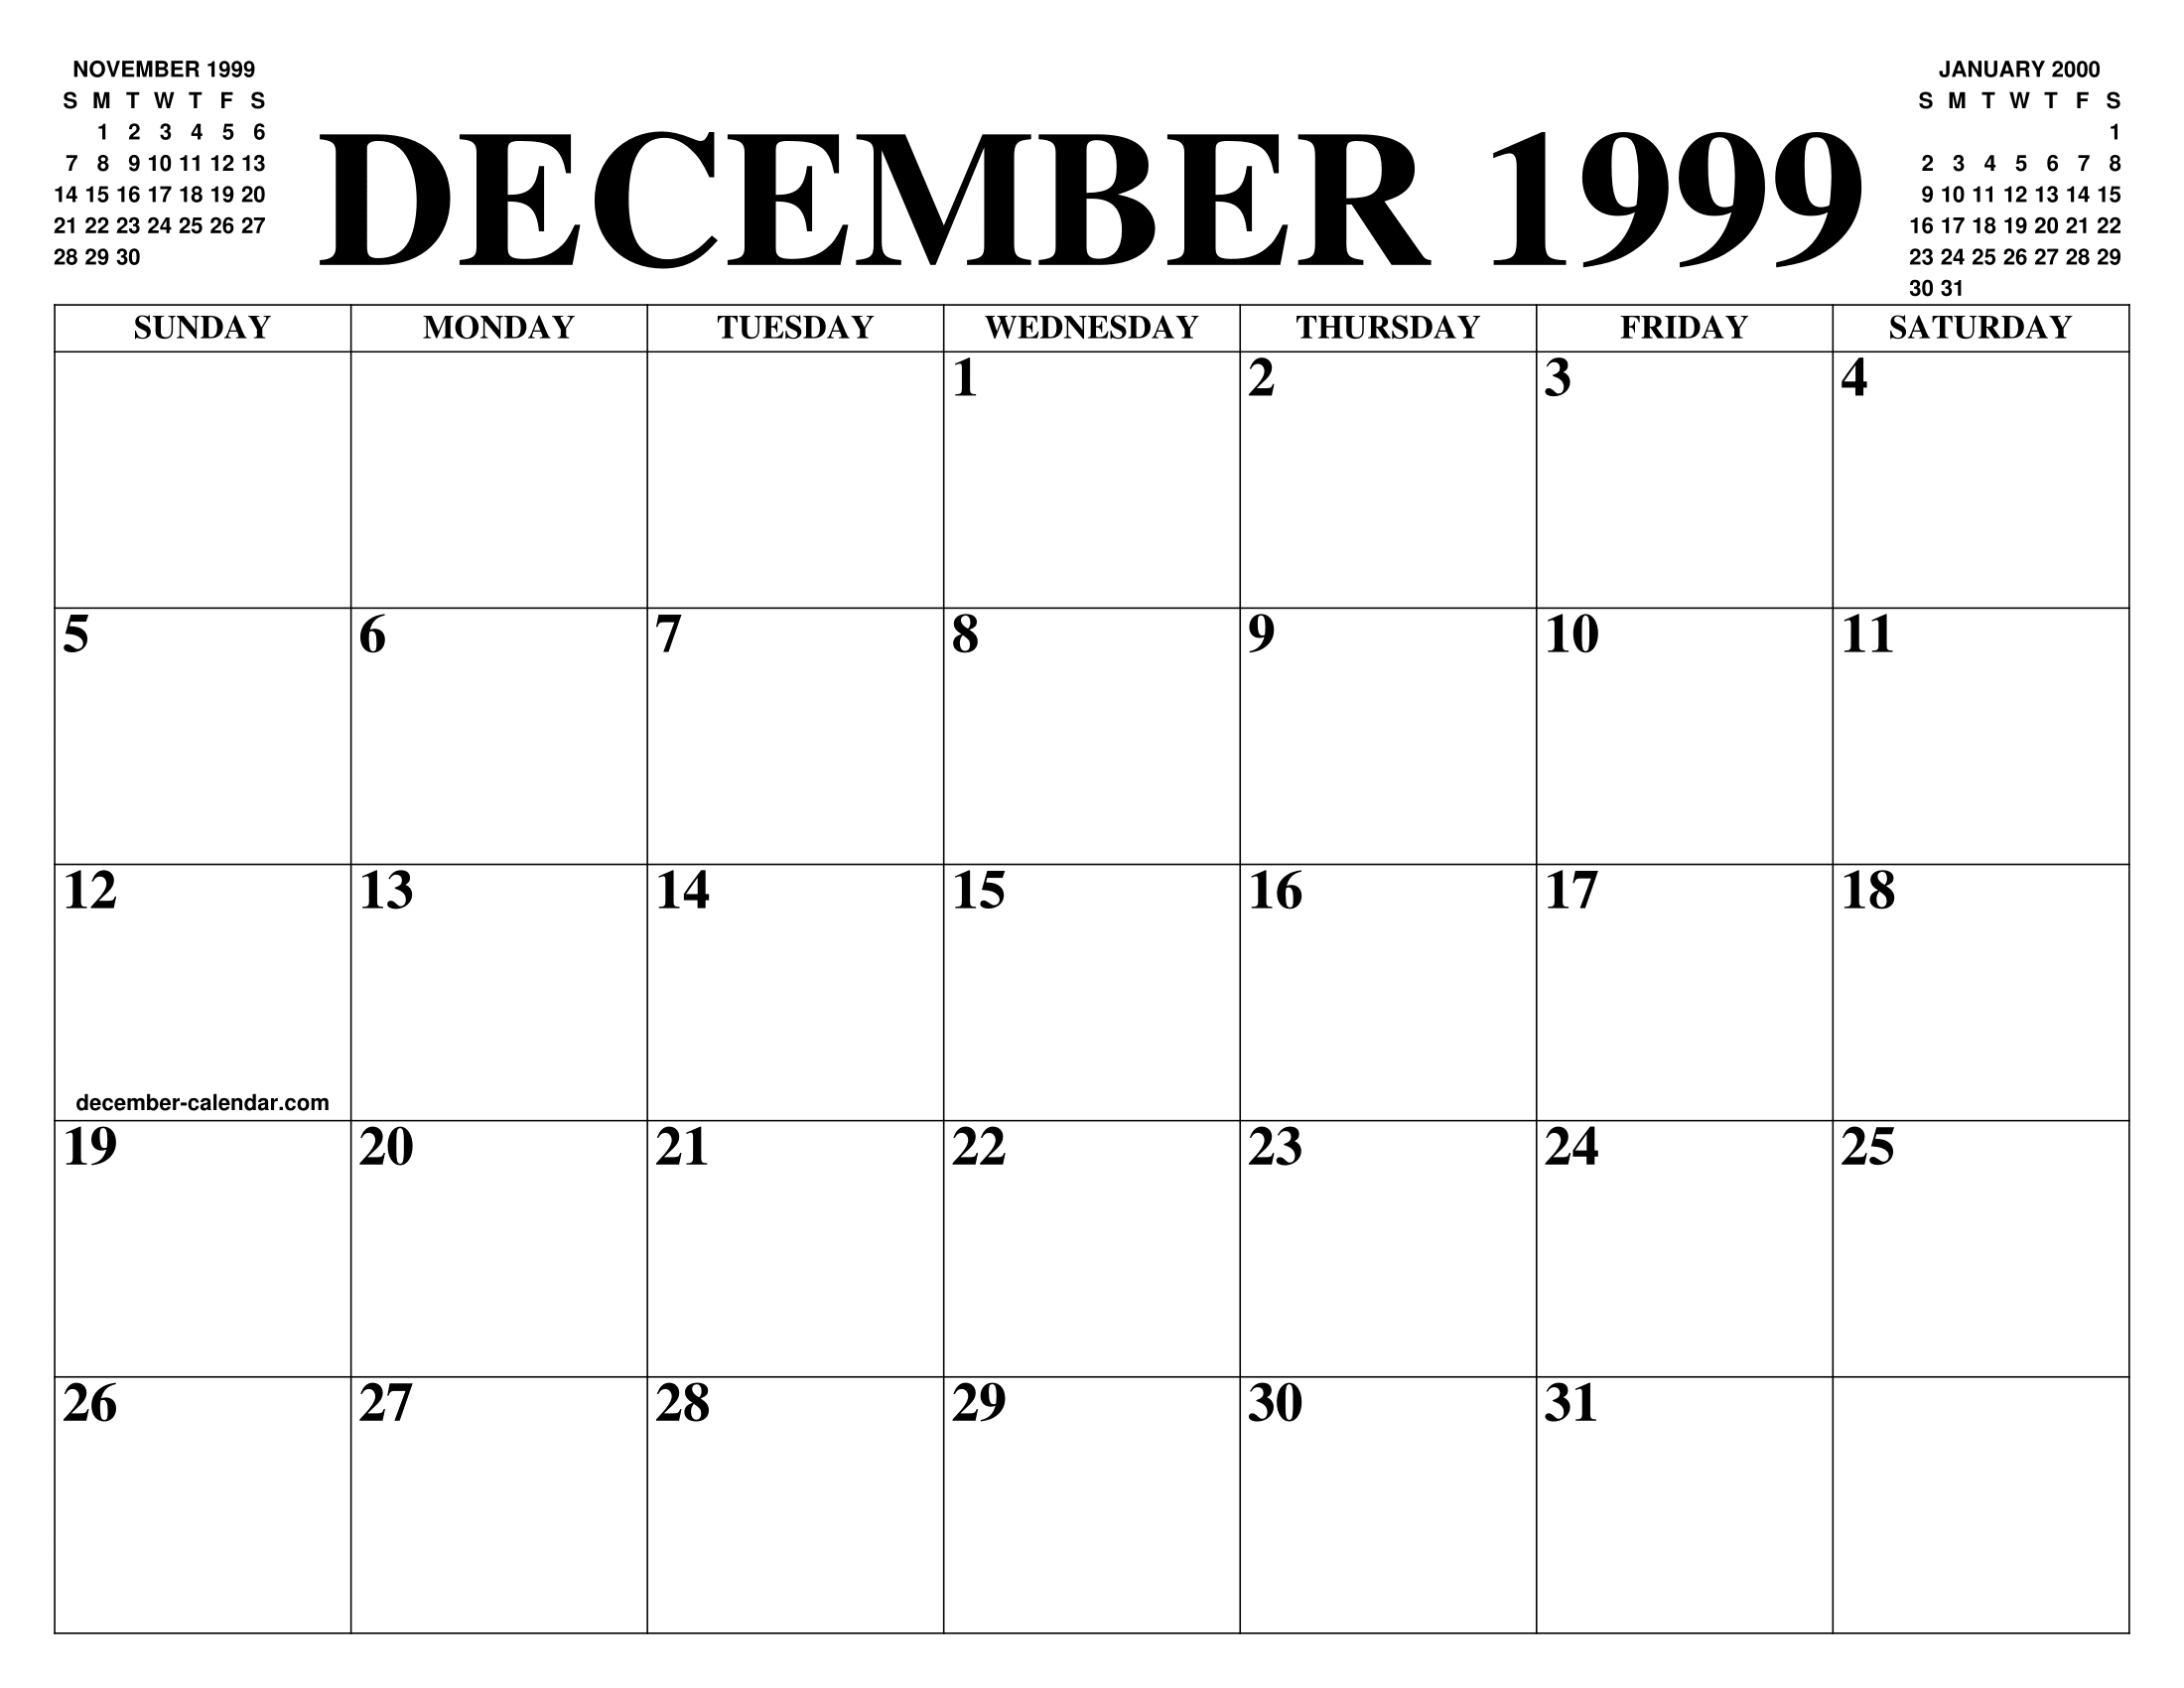 DECEMBER 1999 CALENDAR OF THE MONTH: FREE PRINTABLE DECEMBER CALENDAR